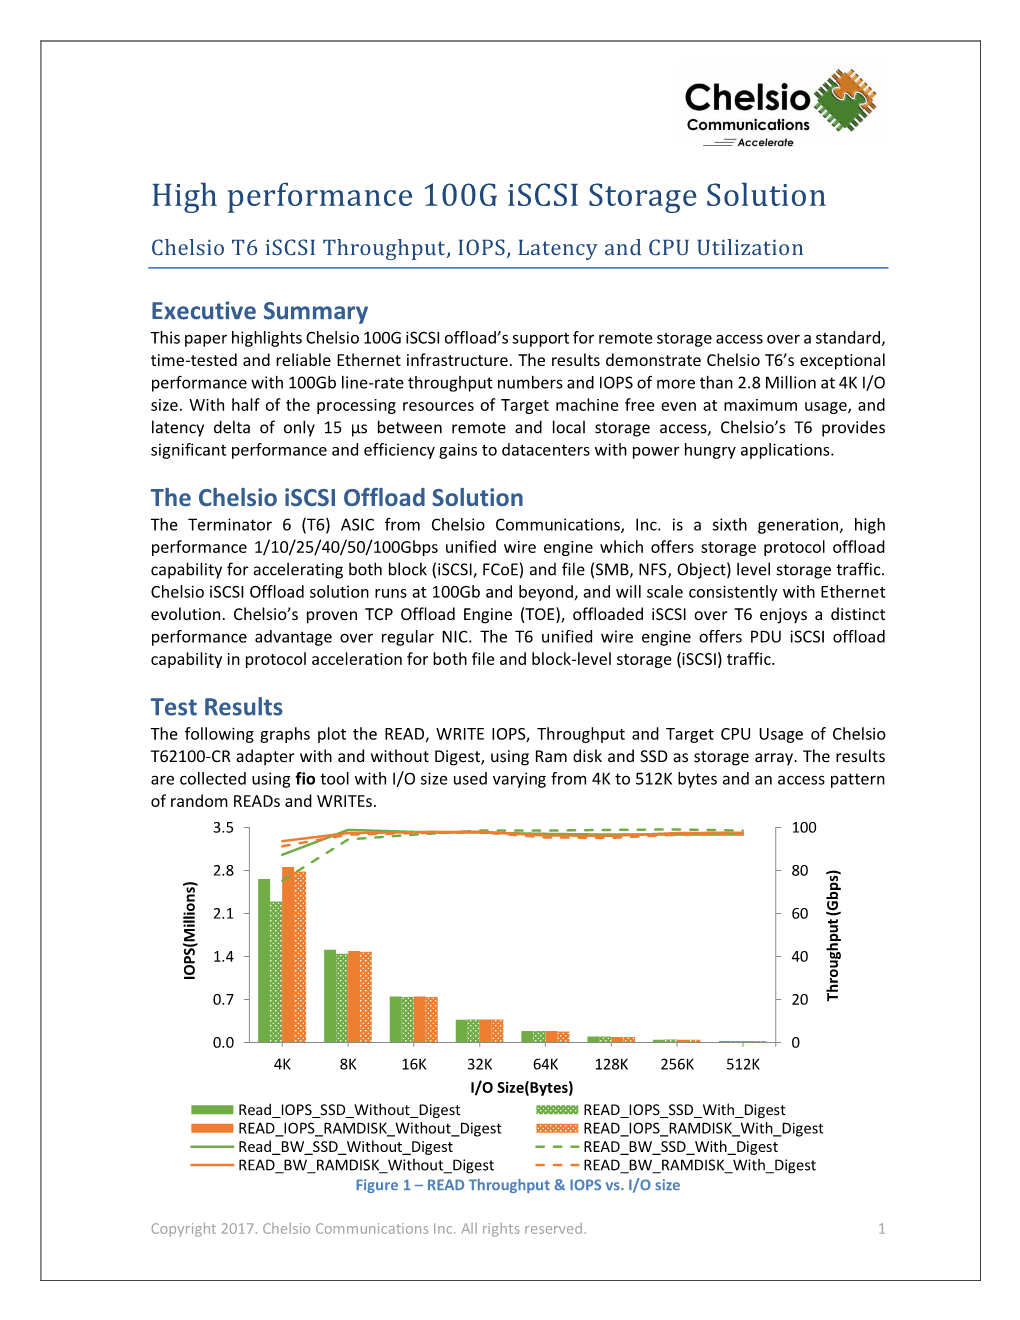 High Performance 100G Iscsi Storage Solution